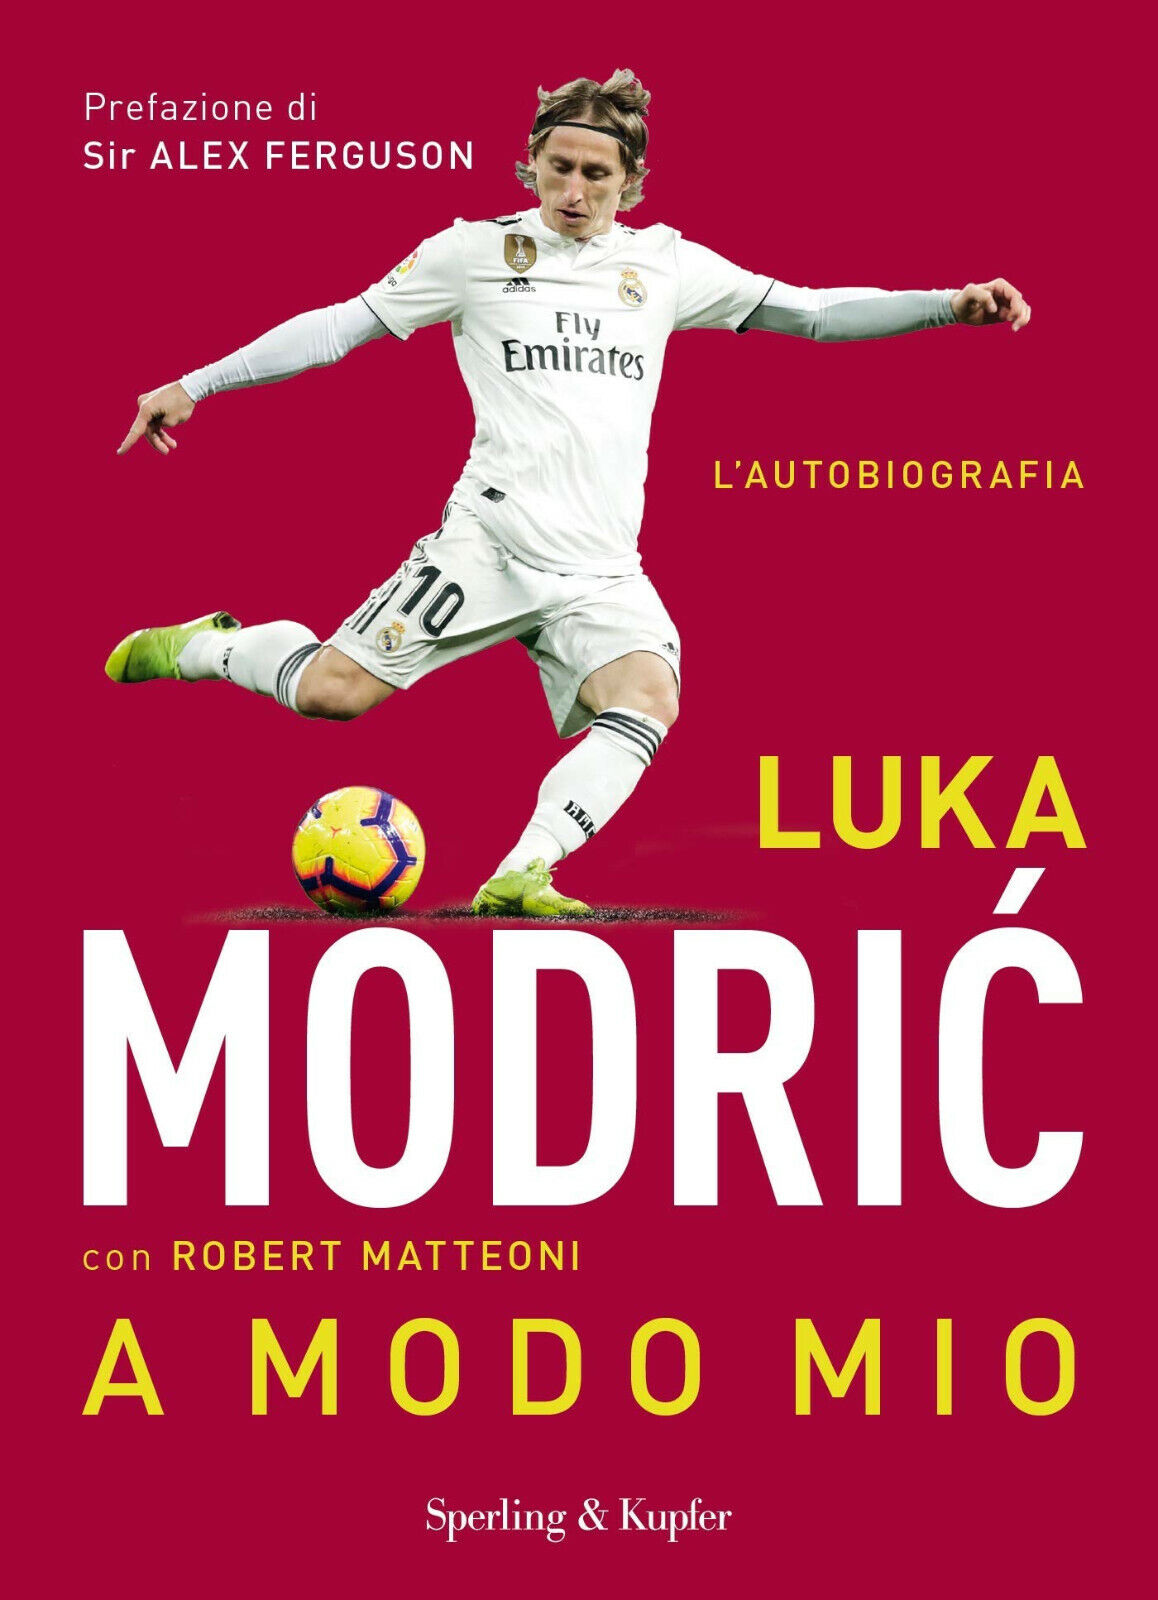 A modo mio - Luka Modric, Robert Matteoni - Sperling & Kupfer, 2020 libro usato